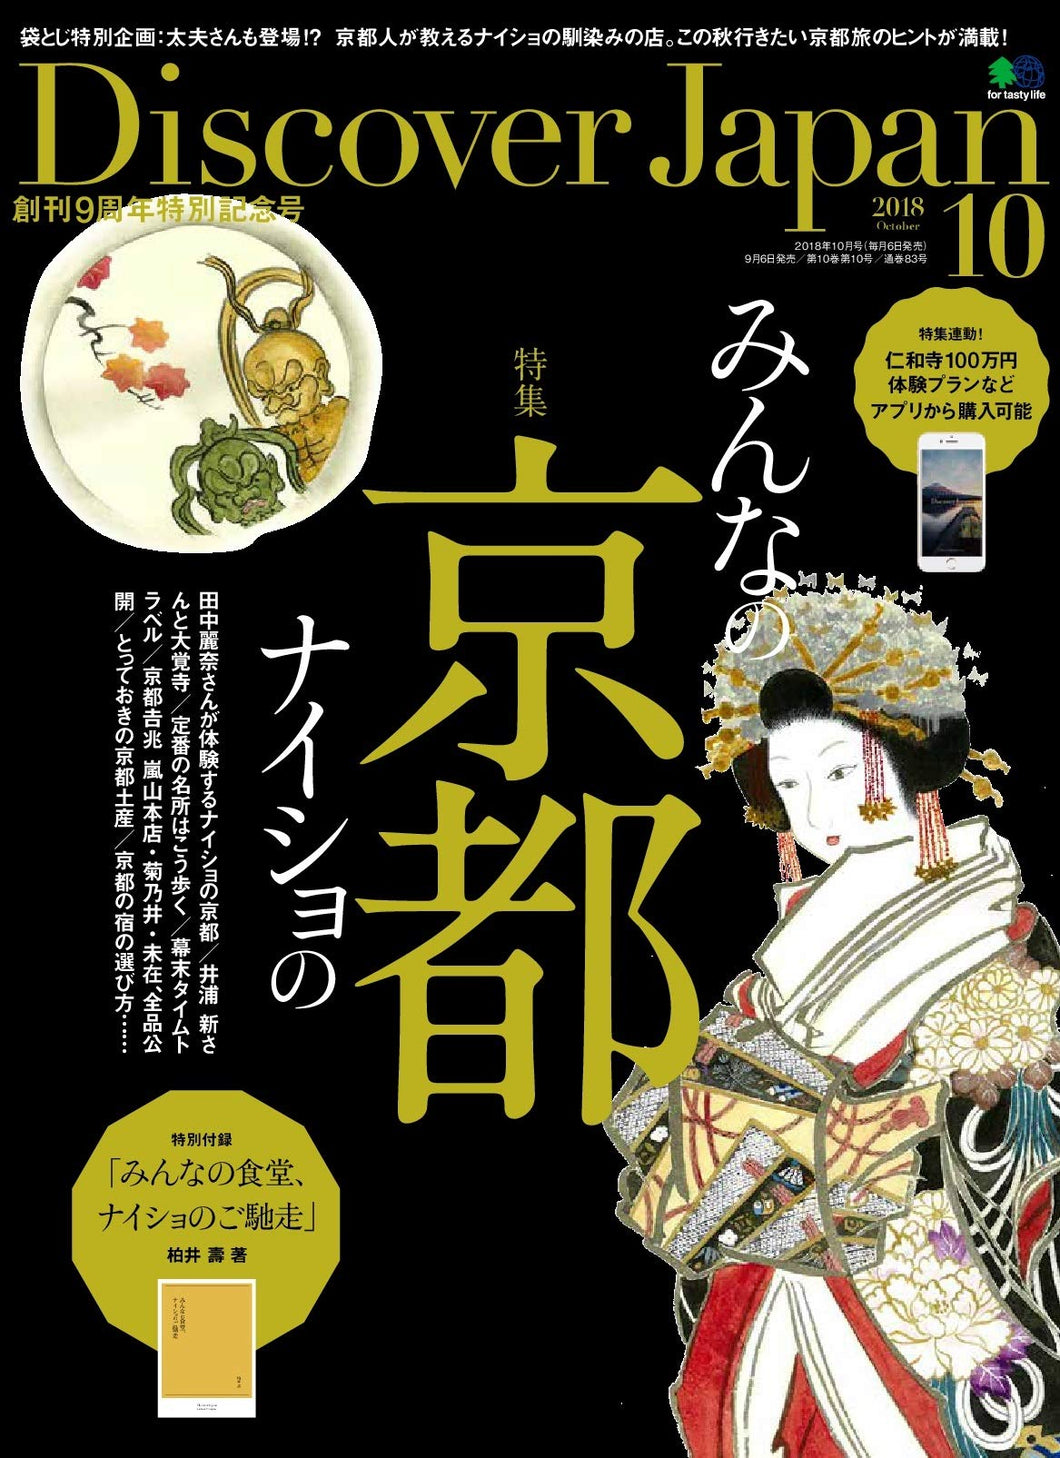 Discover Japan 2018年10月号「みんなの京都、ナイショの京都」- 2018/9/6発売